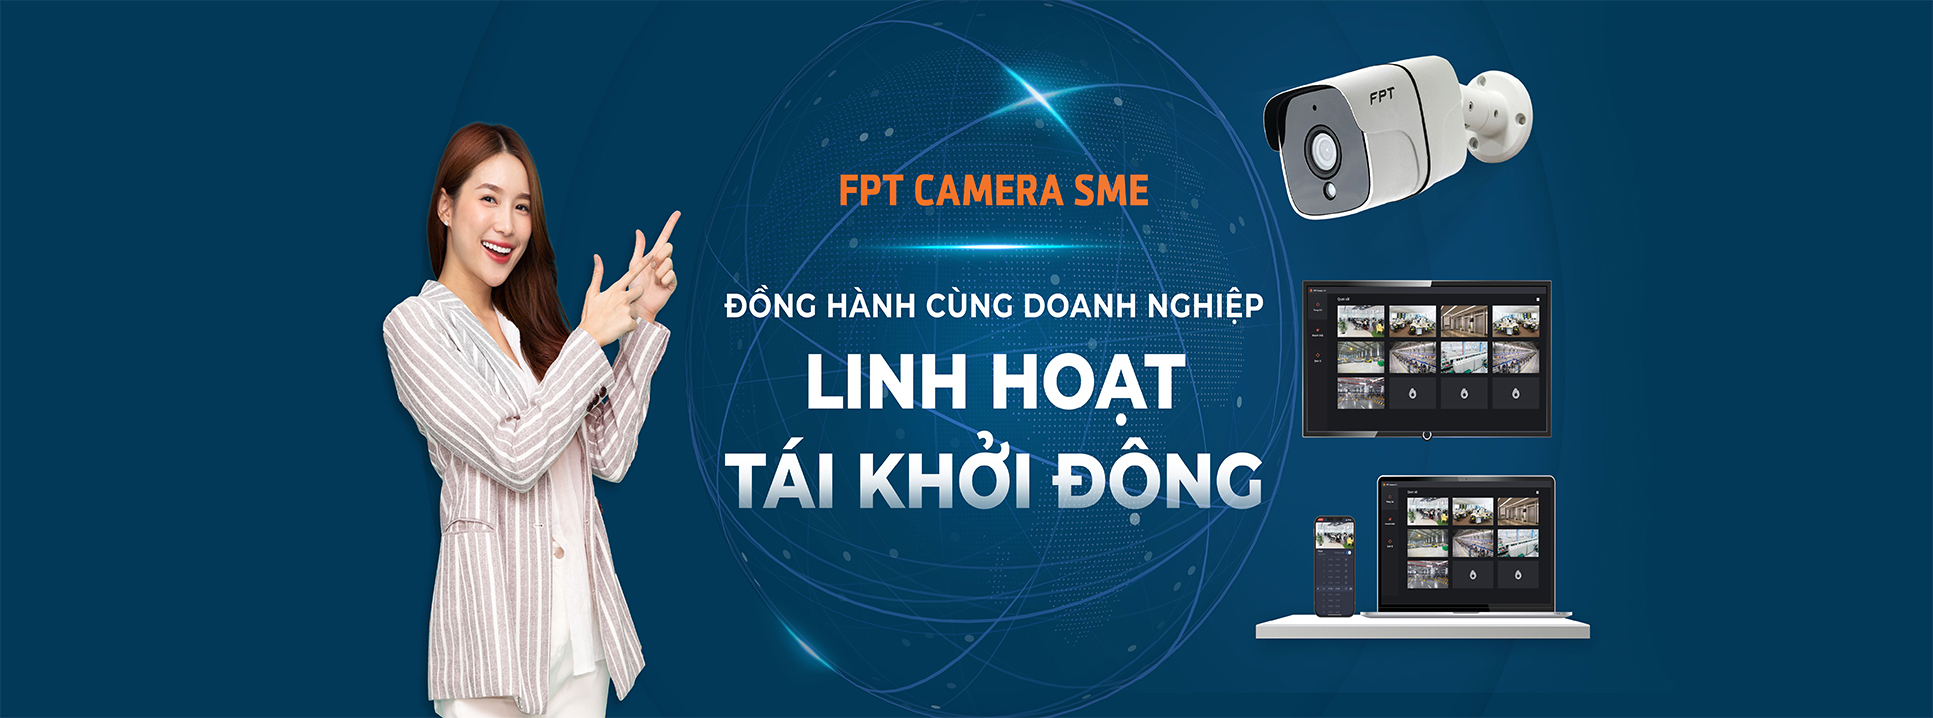 https://fpt.org.vn/san-pham-dich-vu/smart-home/fpt-camera